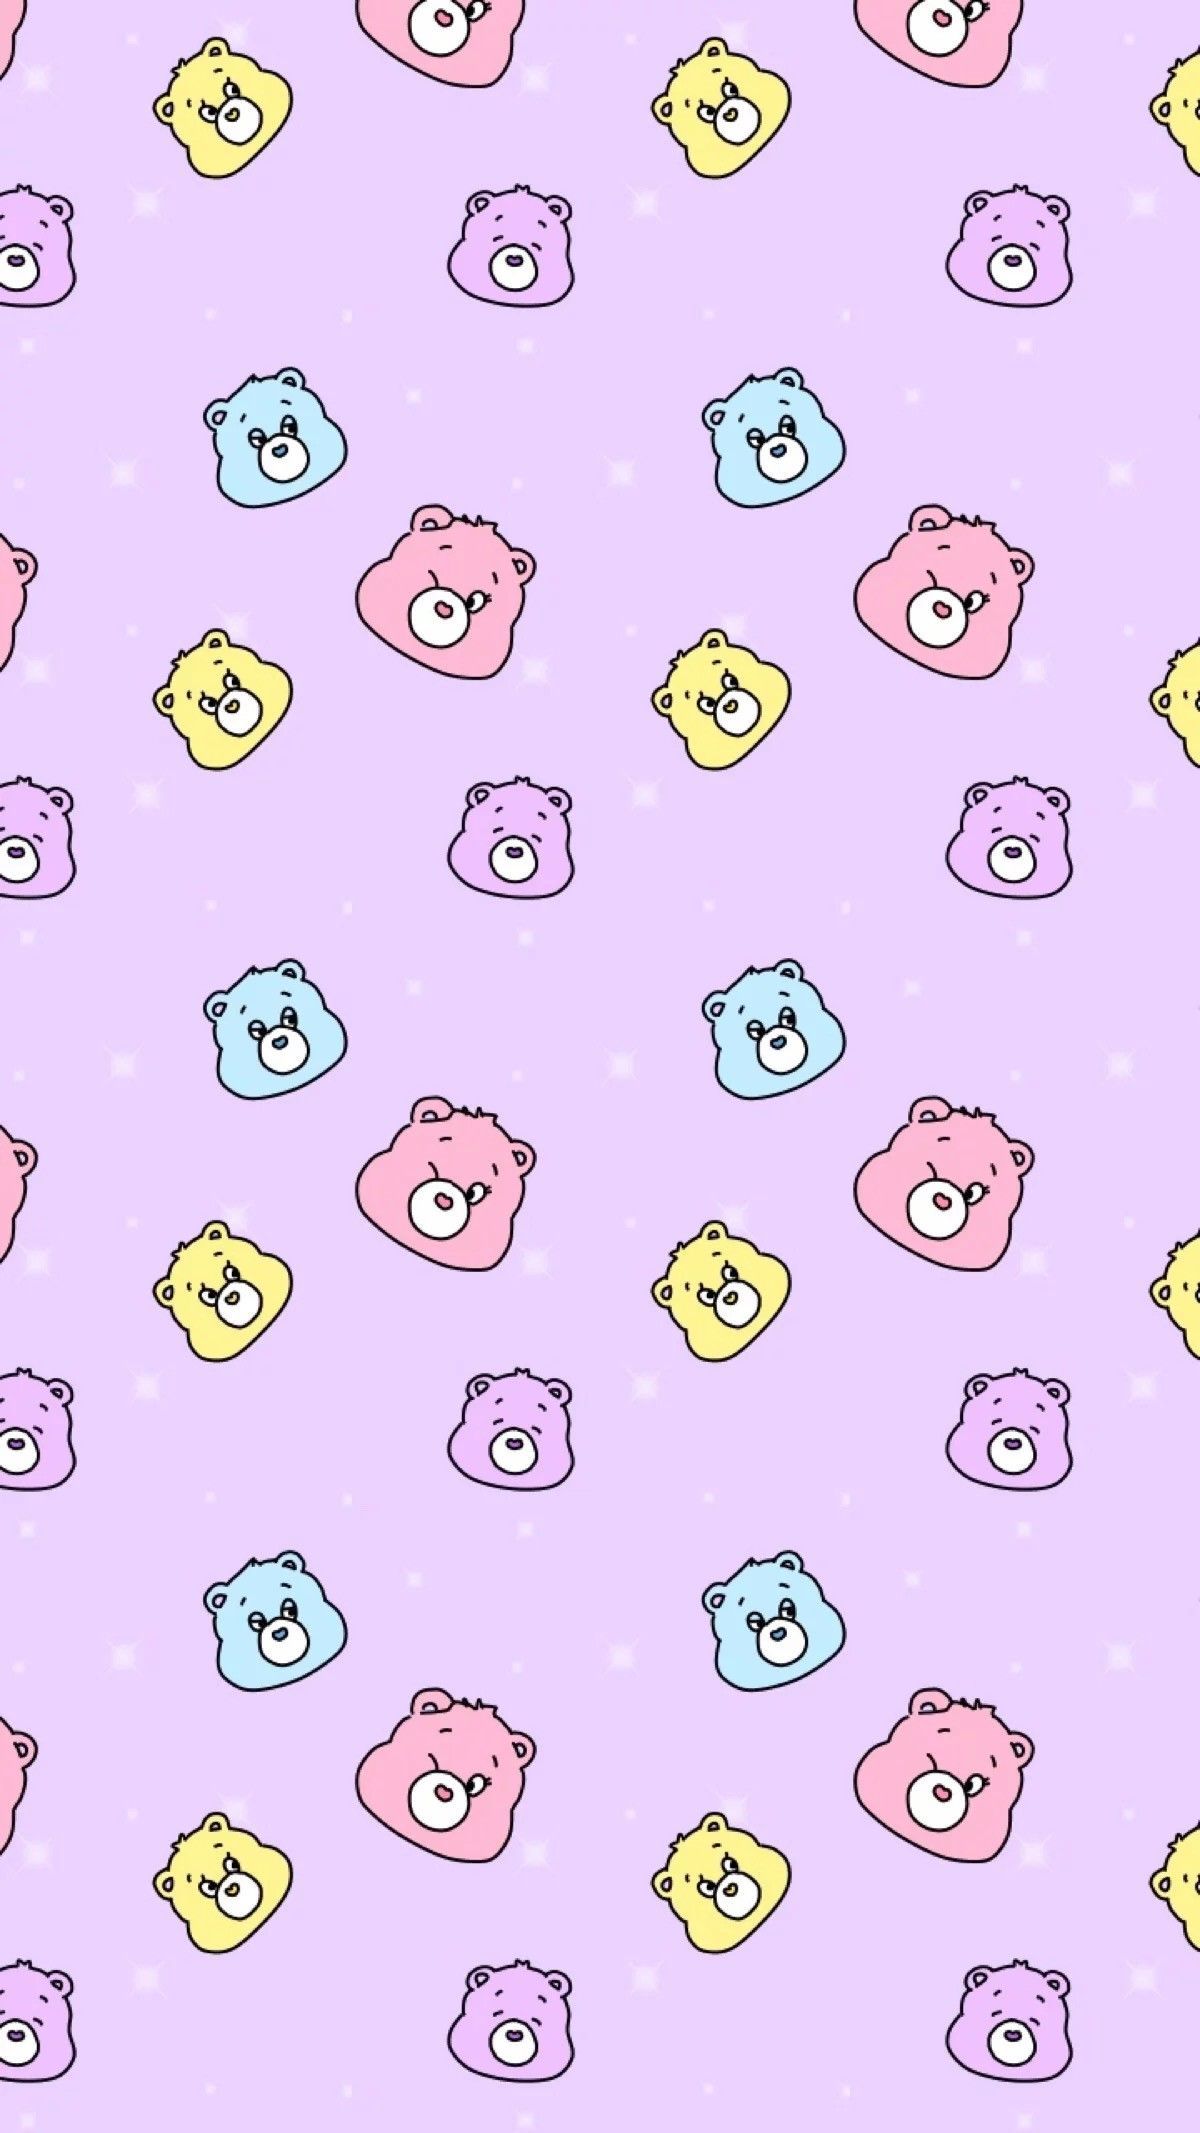 IPhone wallpaper with pastel grumpy bears on a purple background - Care Bears, kawaii